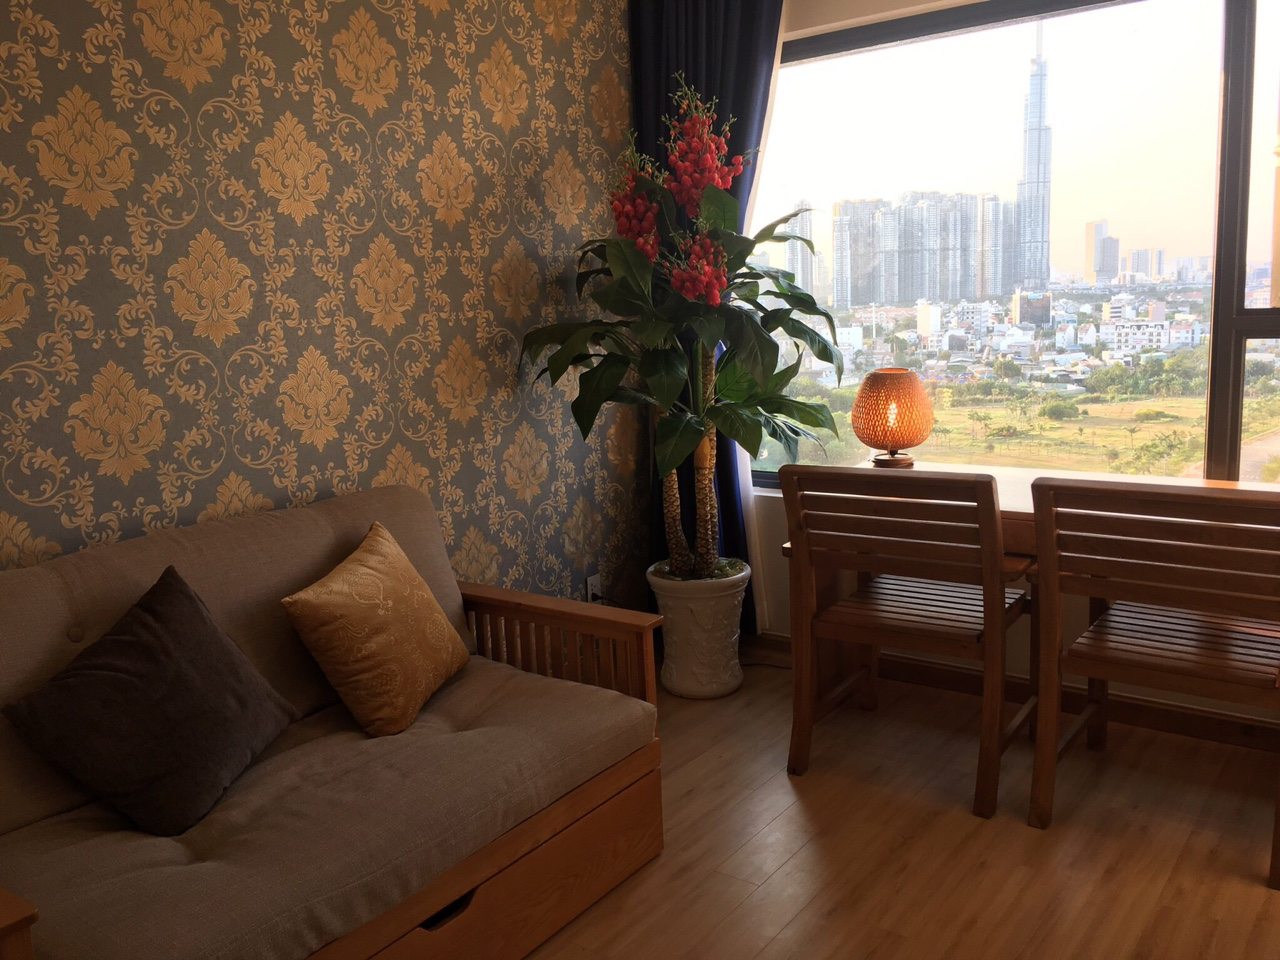 New City Thu Thiem apartment for rent